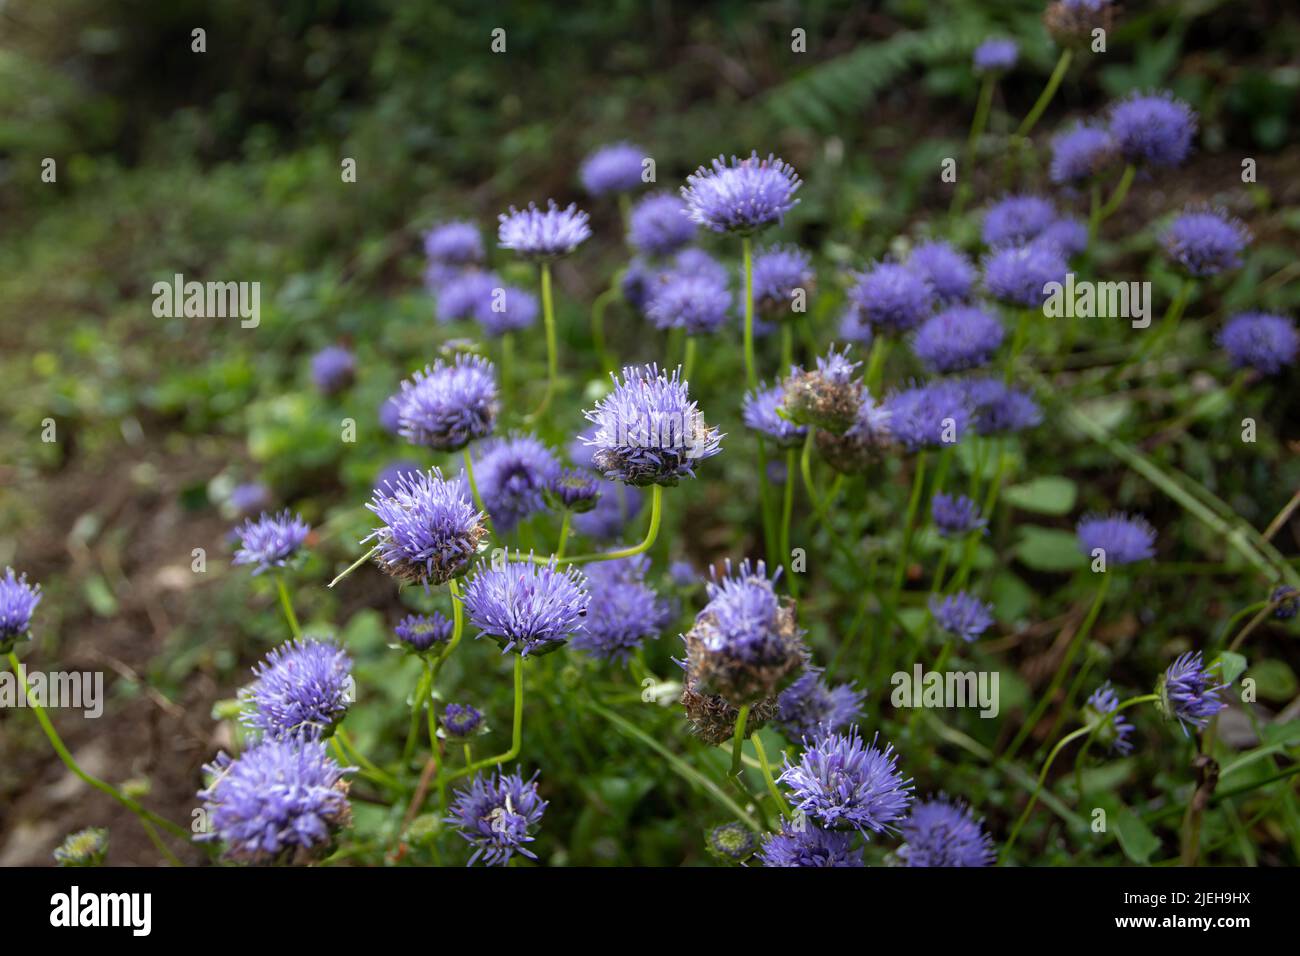 Flores azules en el prado de verano. Jasione laevis Lam. Planta subesp. carpetana. Cerca de Luarca, Asturias, España. Foto de stock